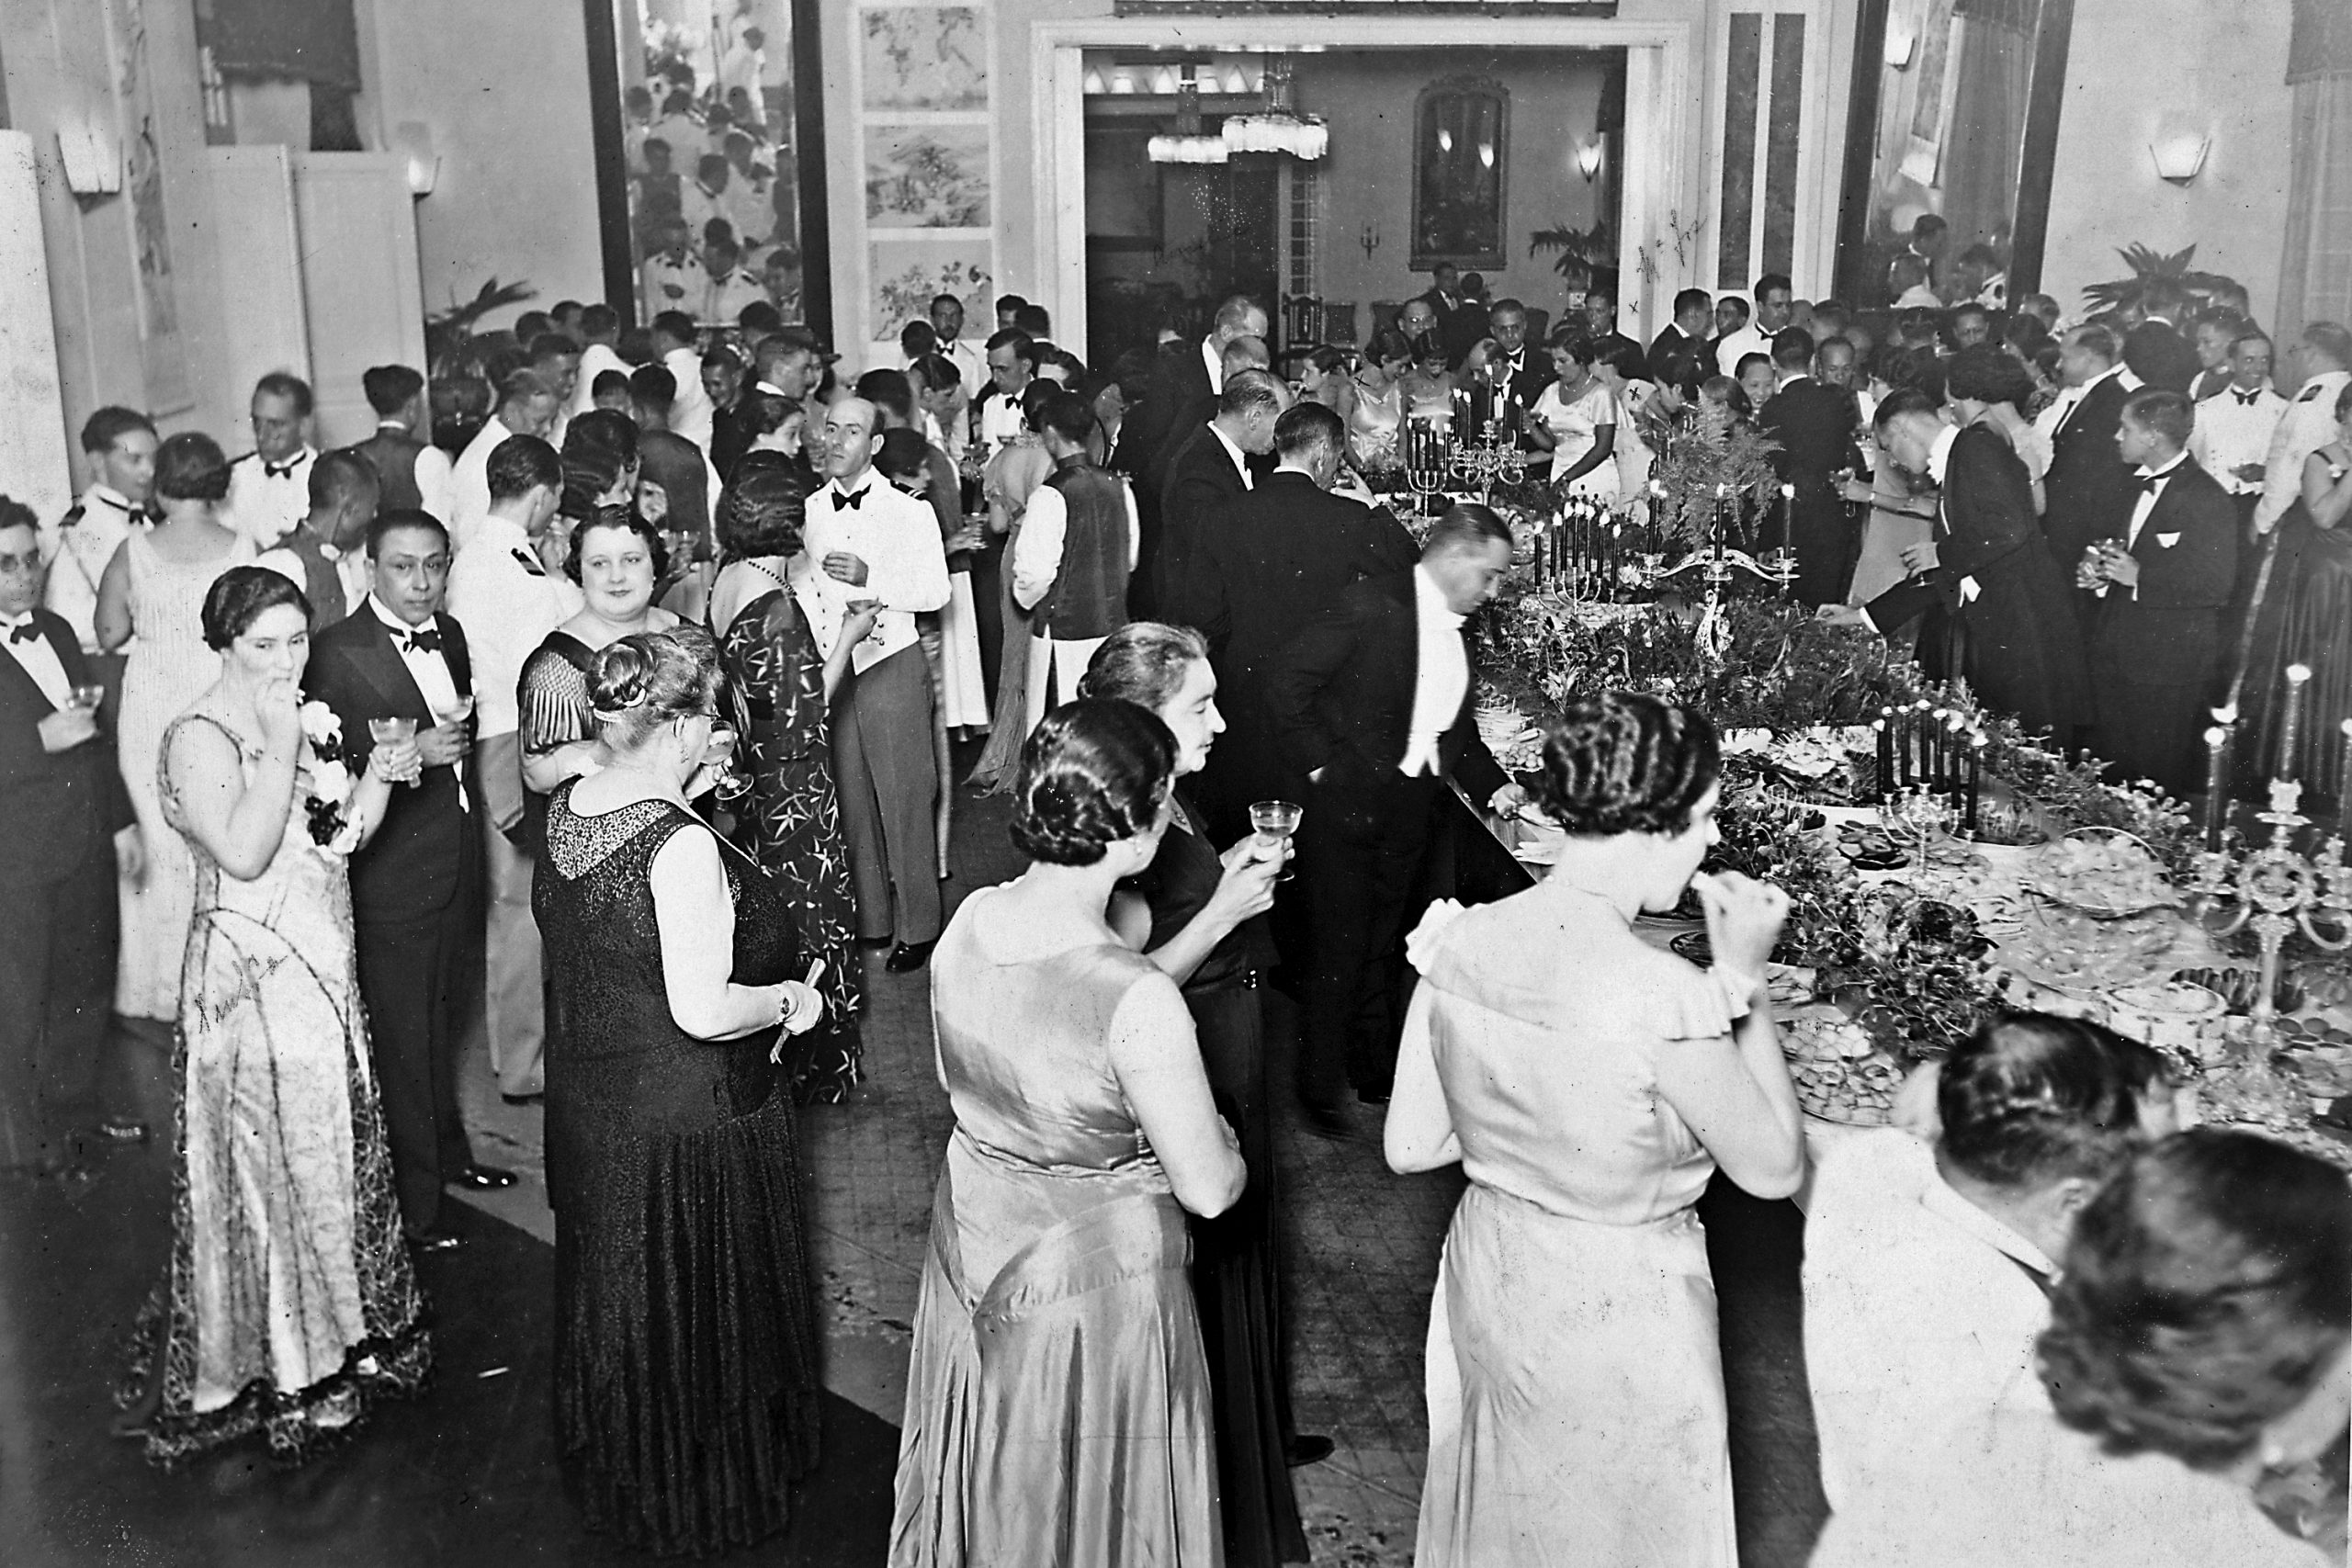 Guests at the Military Club enjoy a ‘chá gordo’ feast in the 1930s - Photo Courtesy of Instituto Internacional de Macau